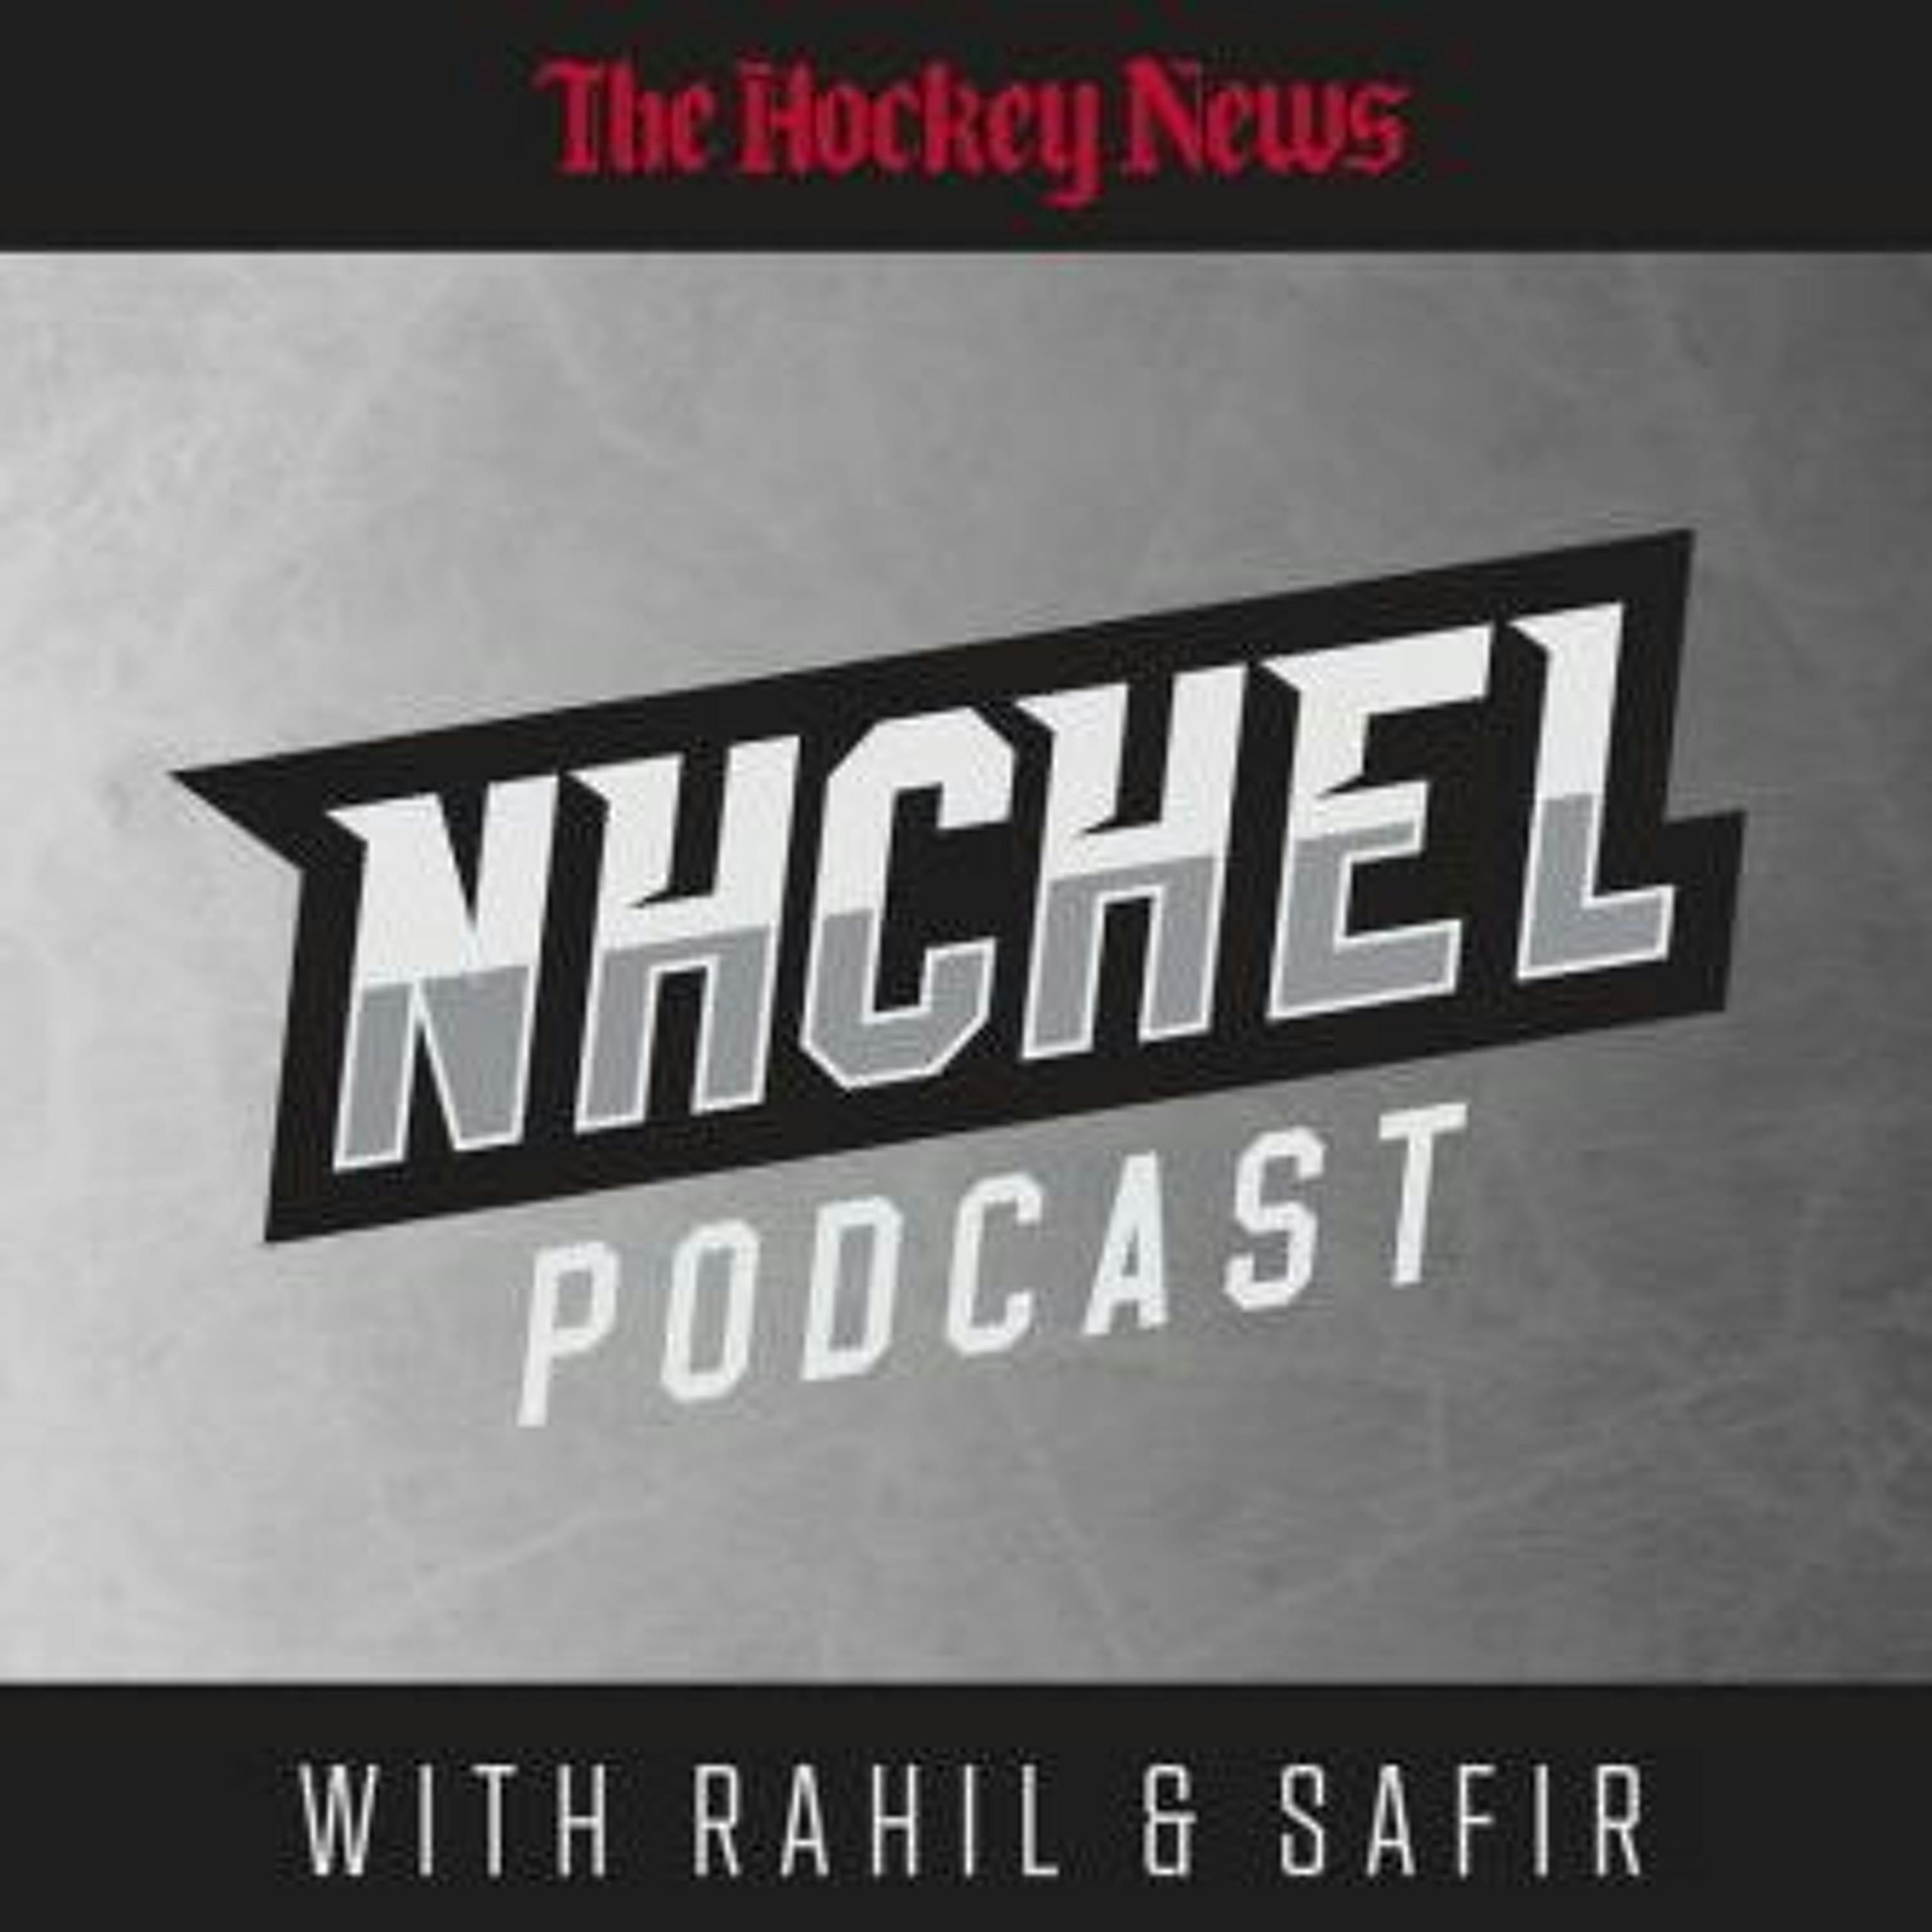 NHChel Podcast: Episode 9 - Arda Ocal